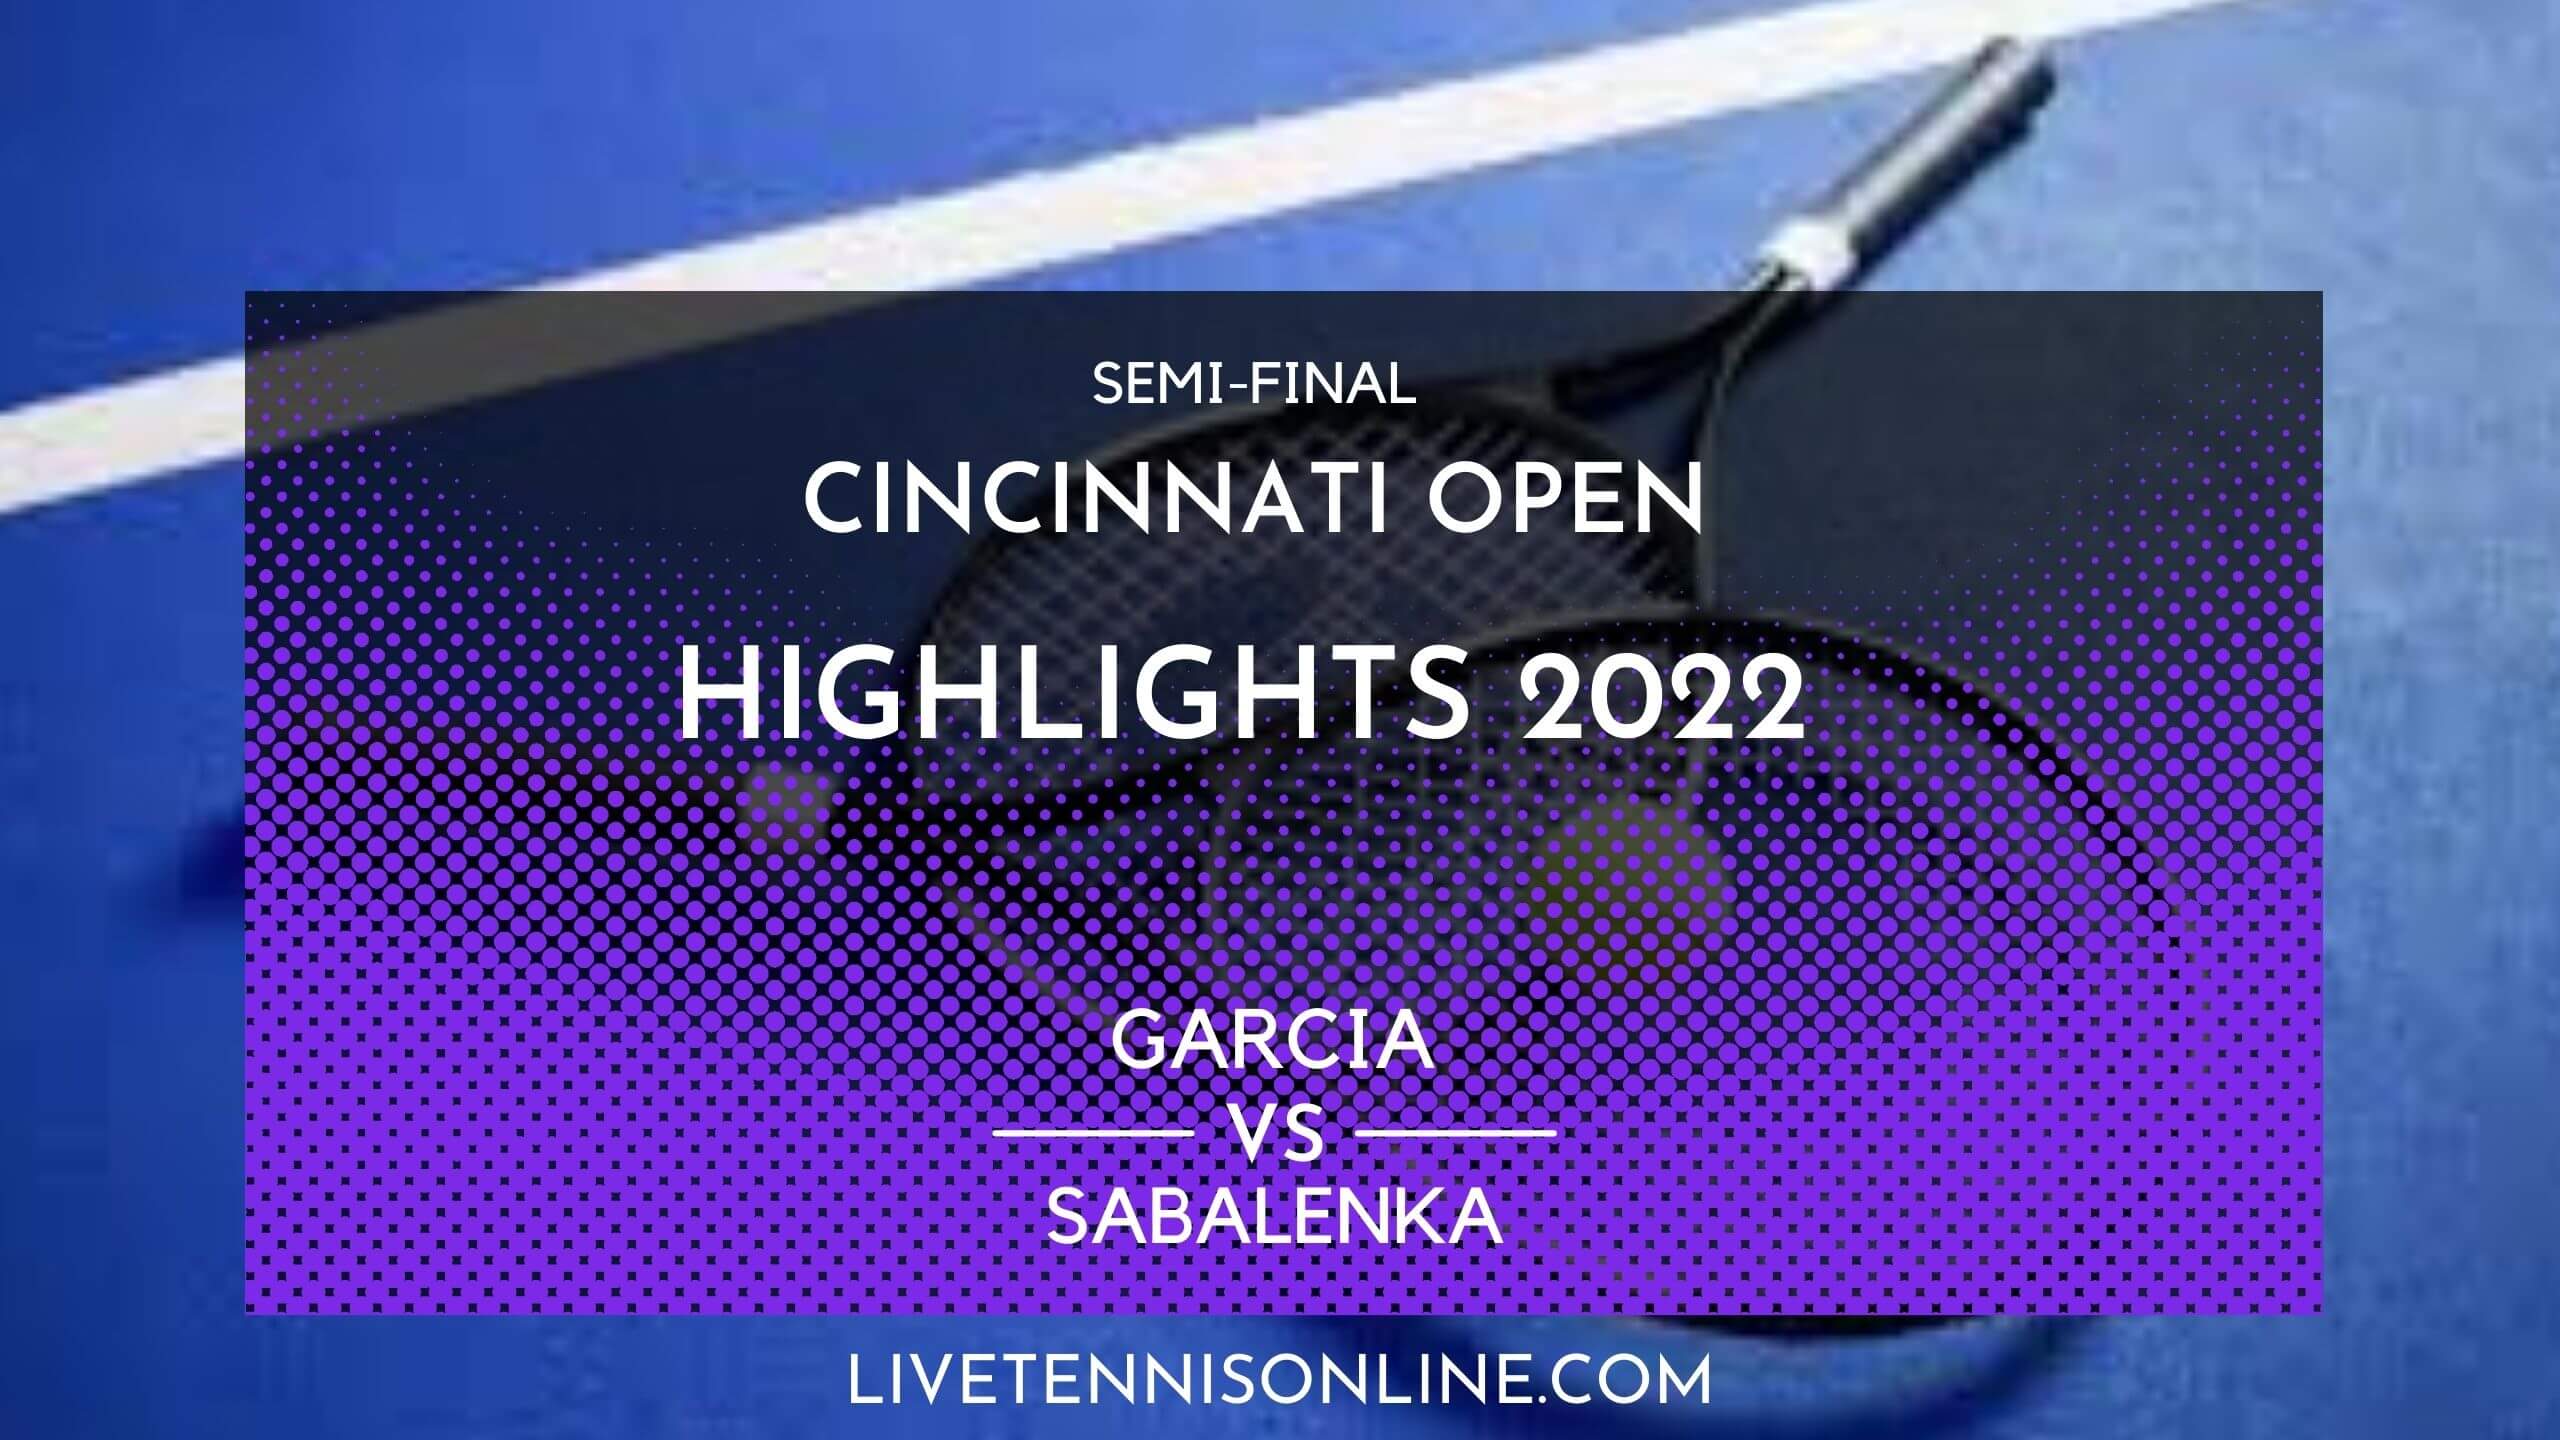 Garcia Vs Sabalenka SF Highlights 2022 Cincinnati Open